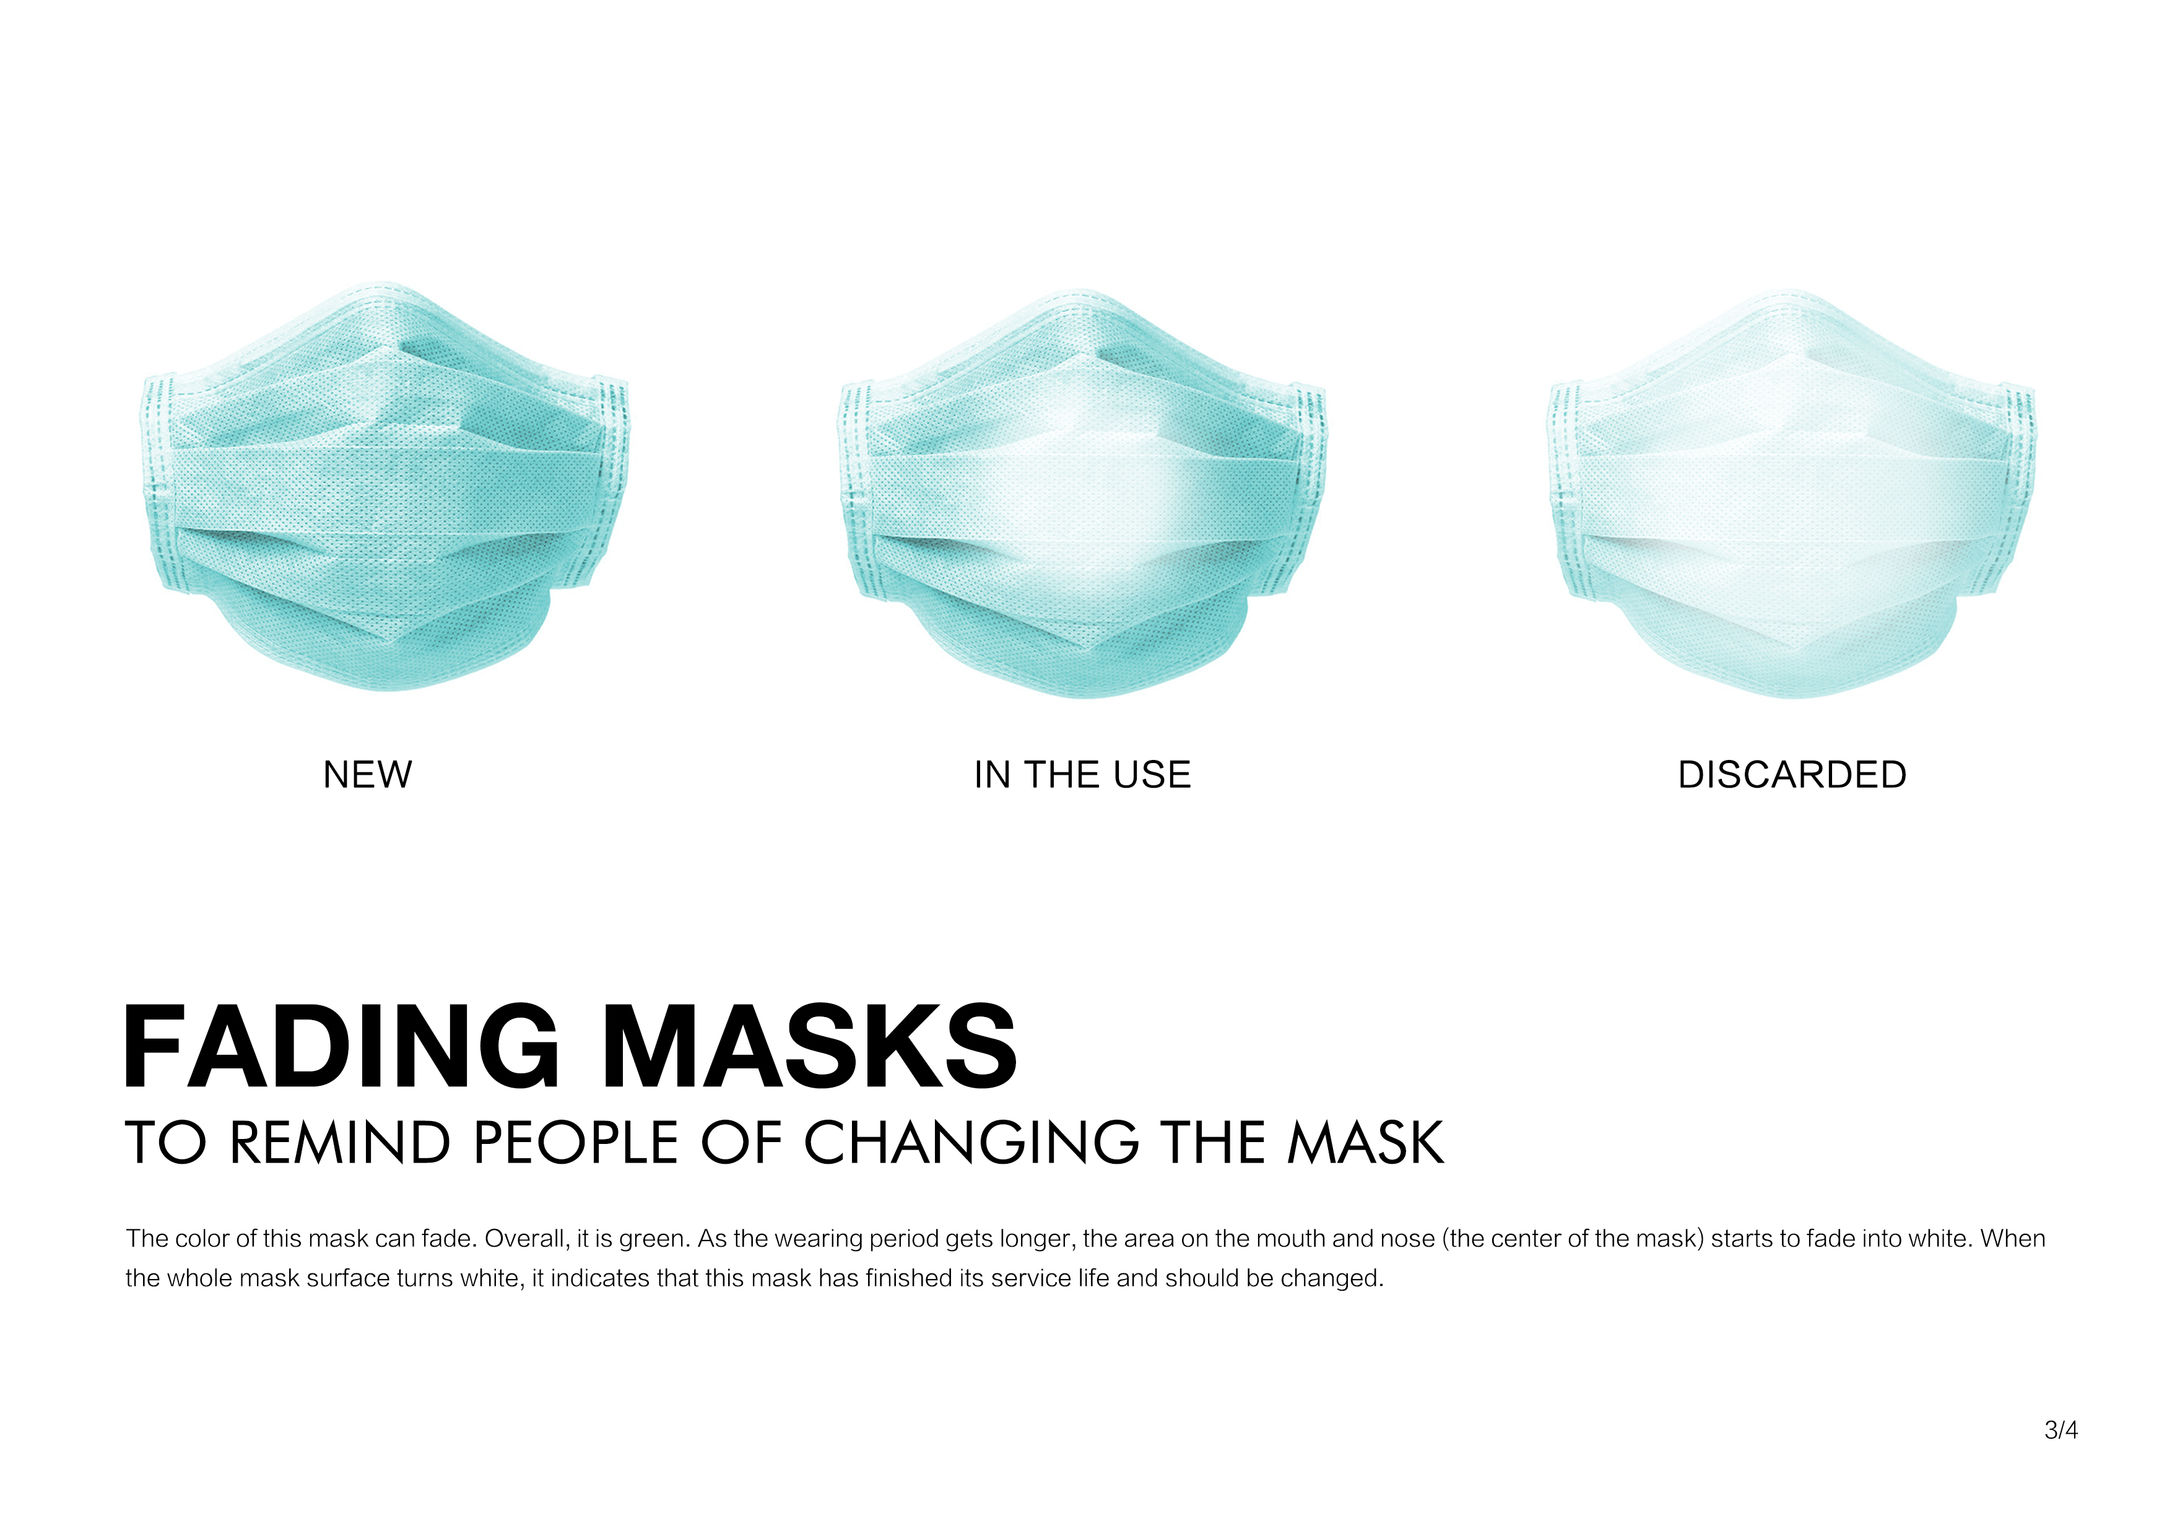 Fading masks